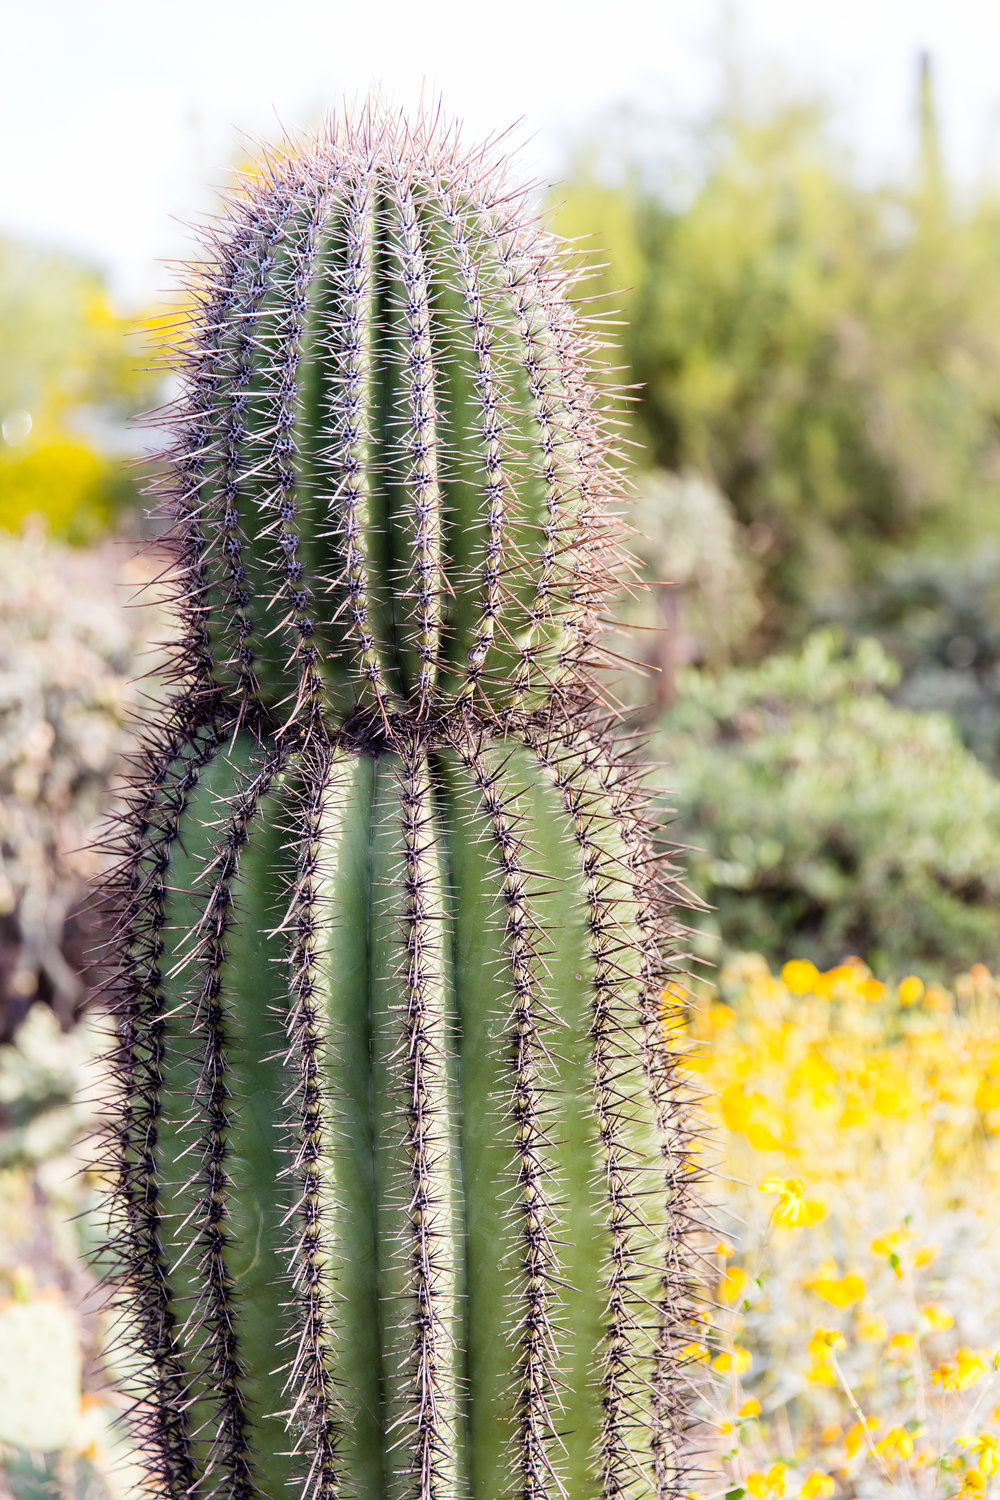 cactus in Arizona sun for travel photography trip